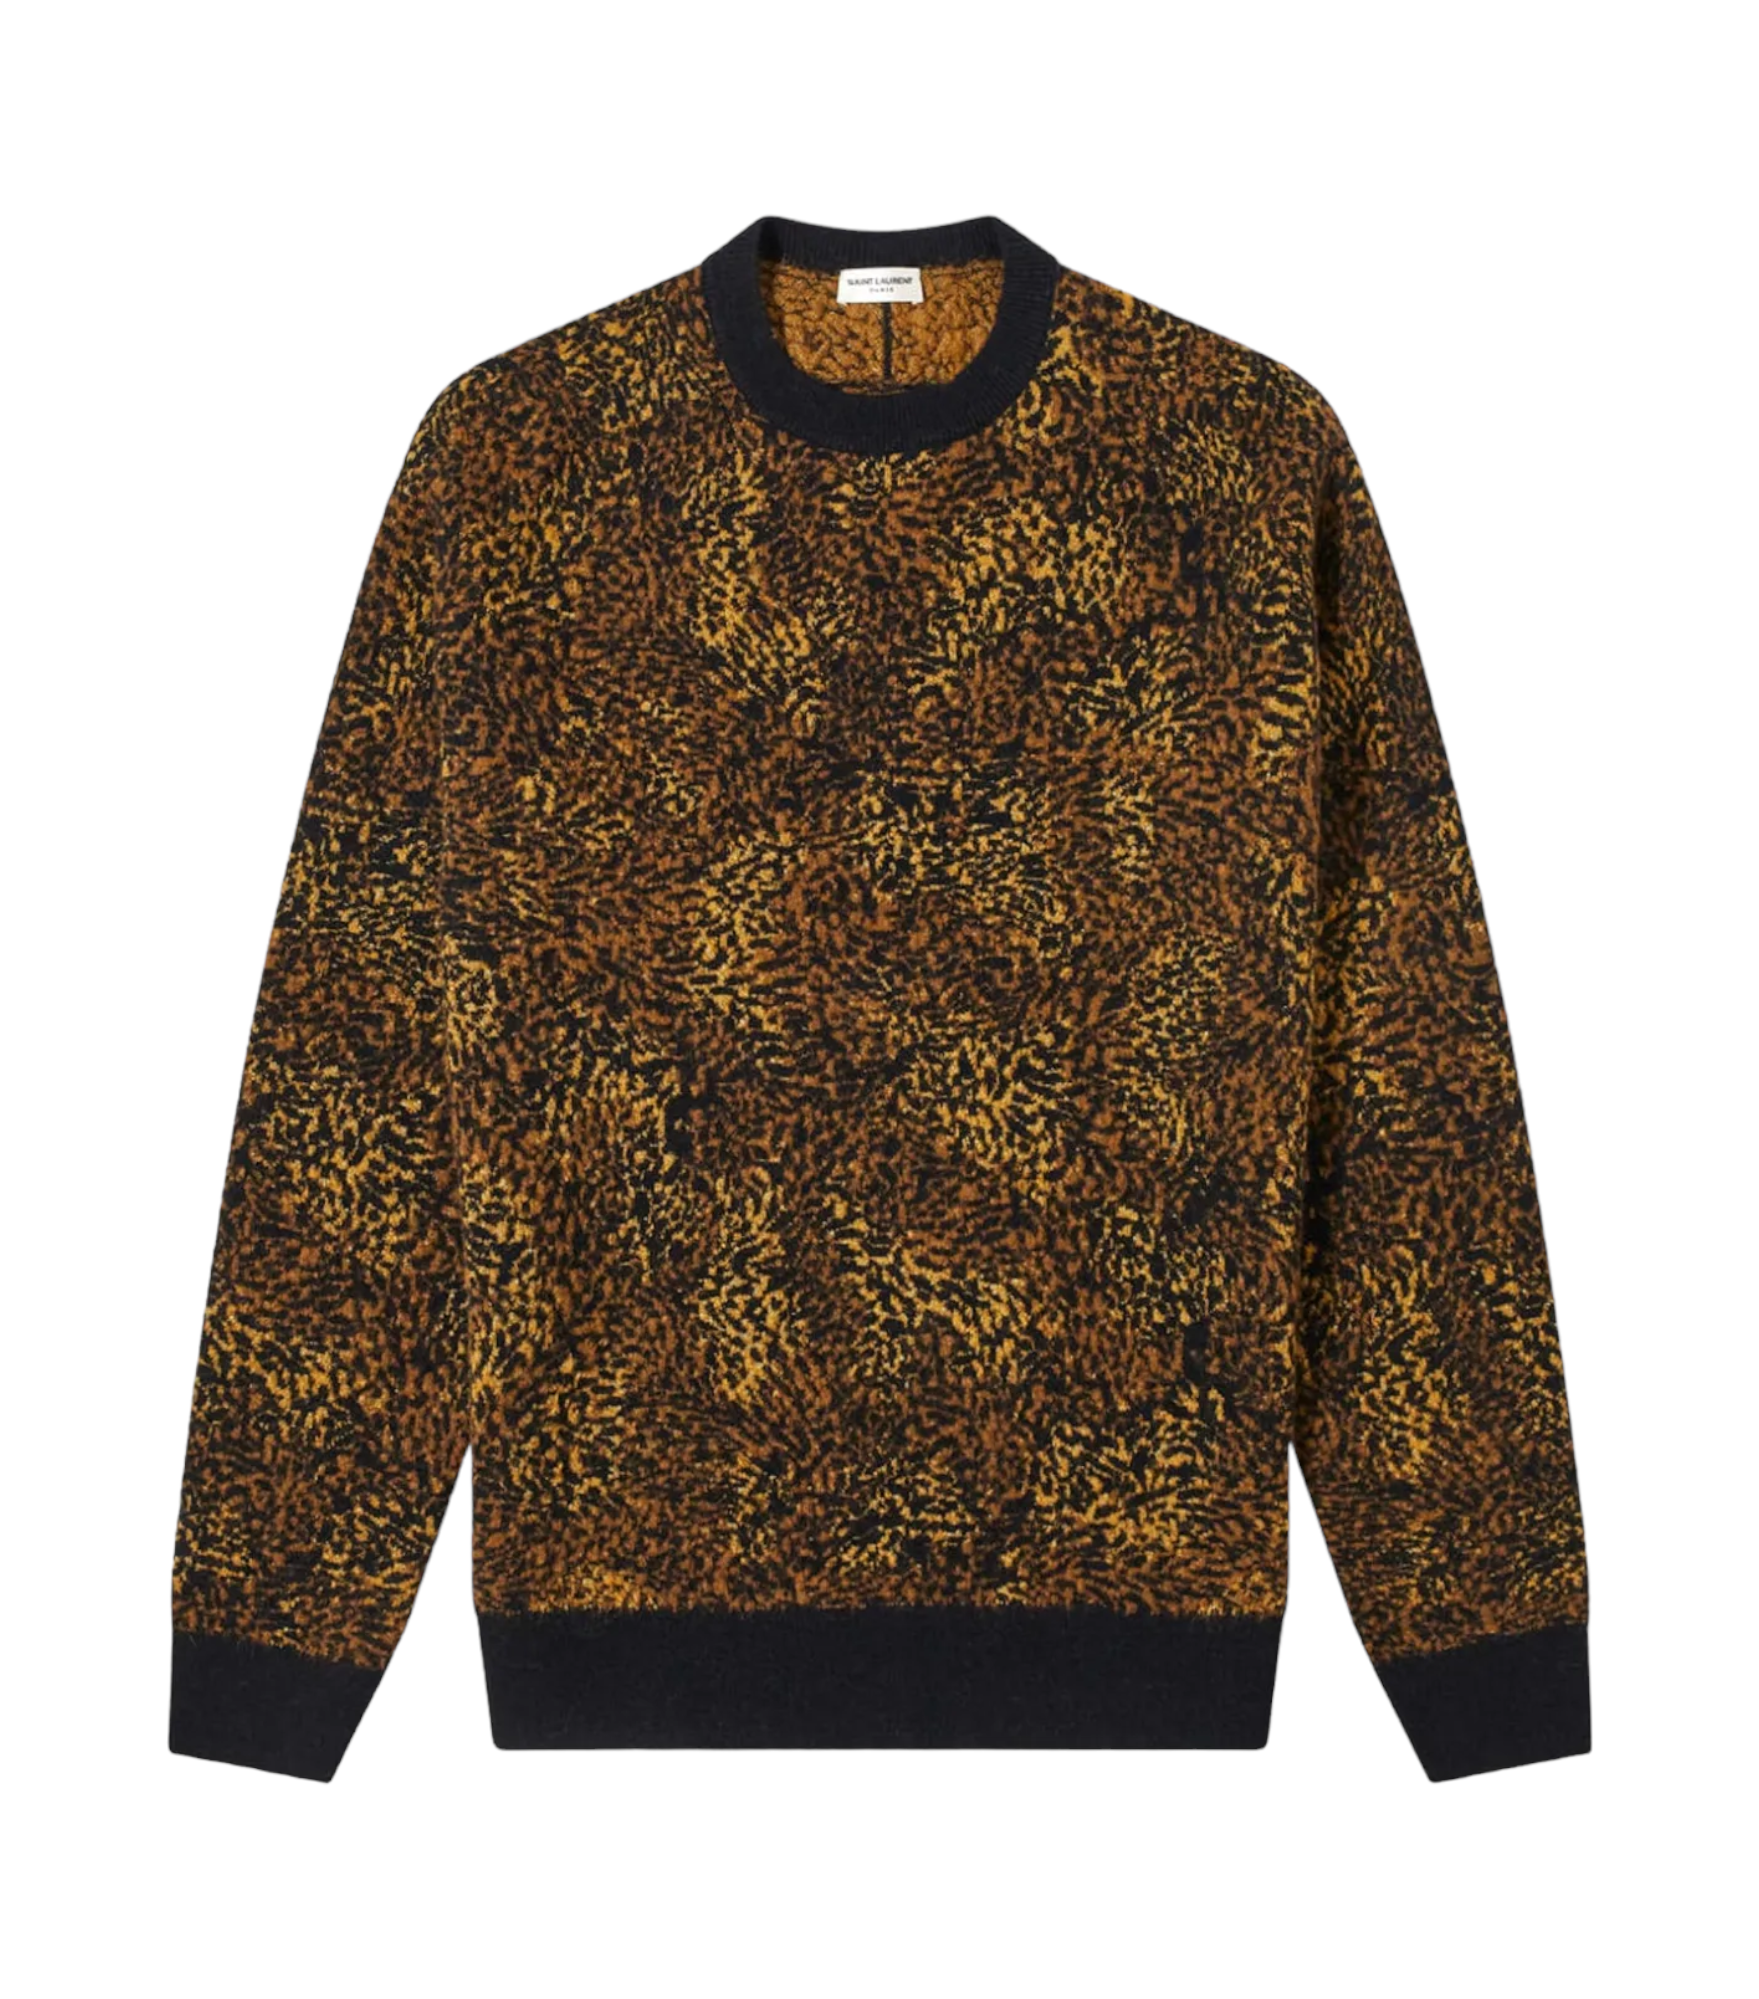 Saint Laurent Knitted Sweatshirt in Leopard Jacquard